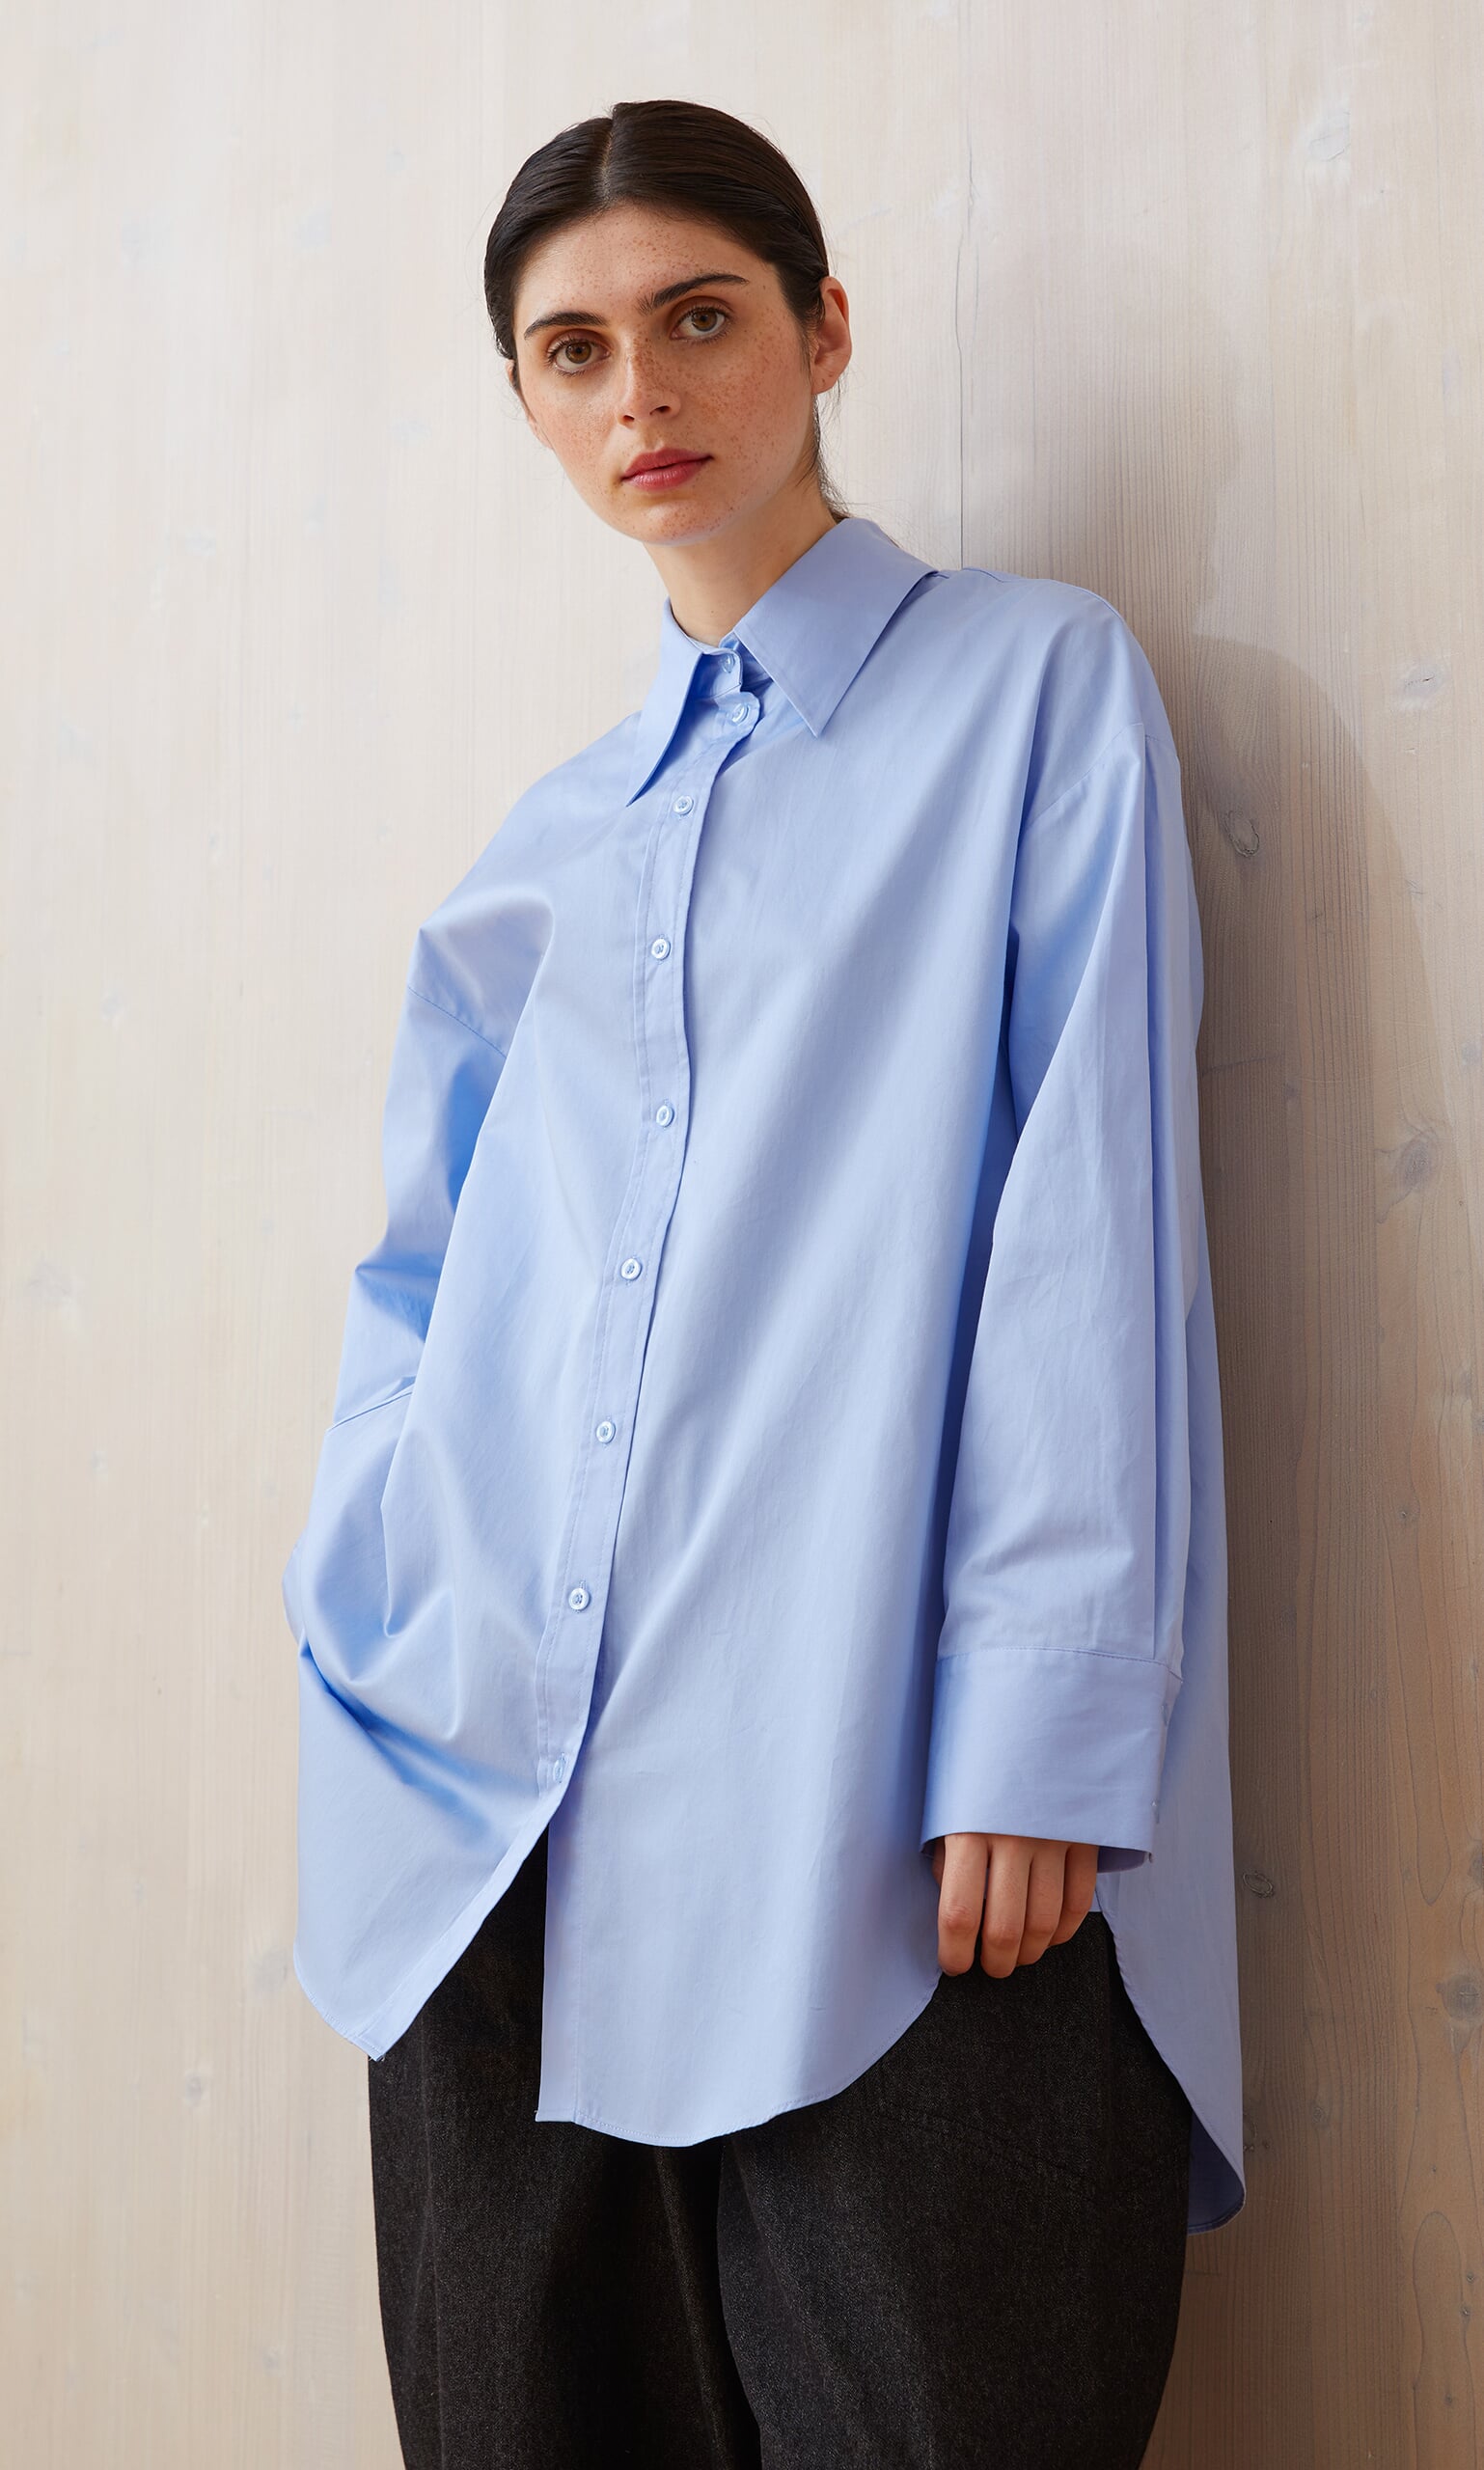 Osborne blue shirt - Plümo Ltd